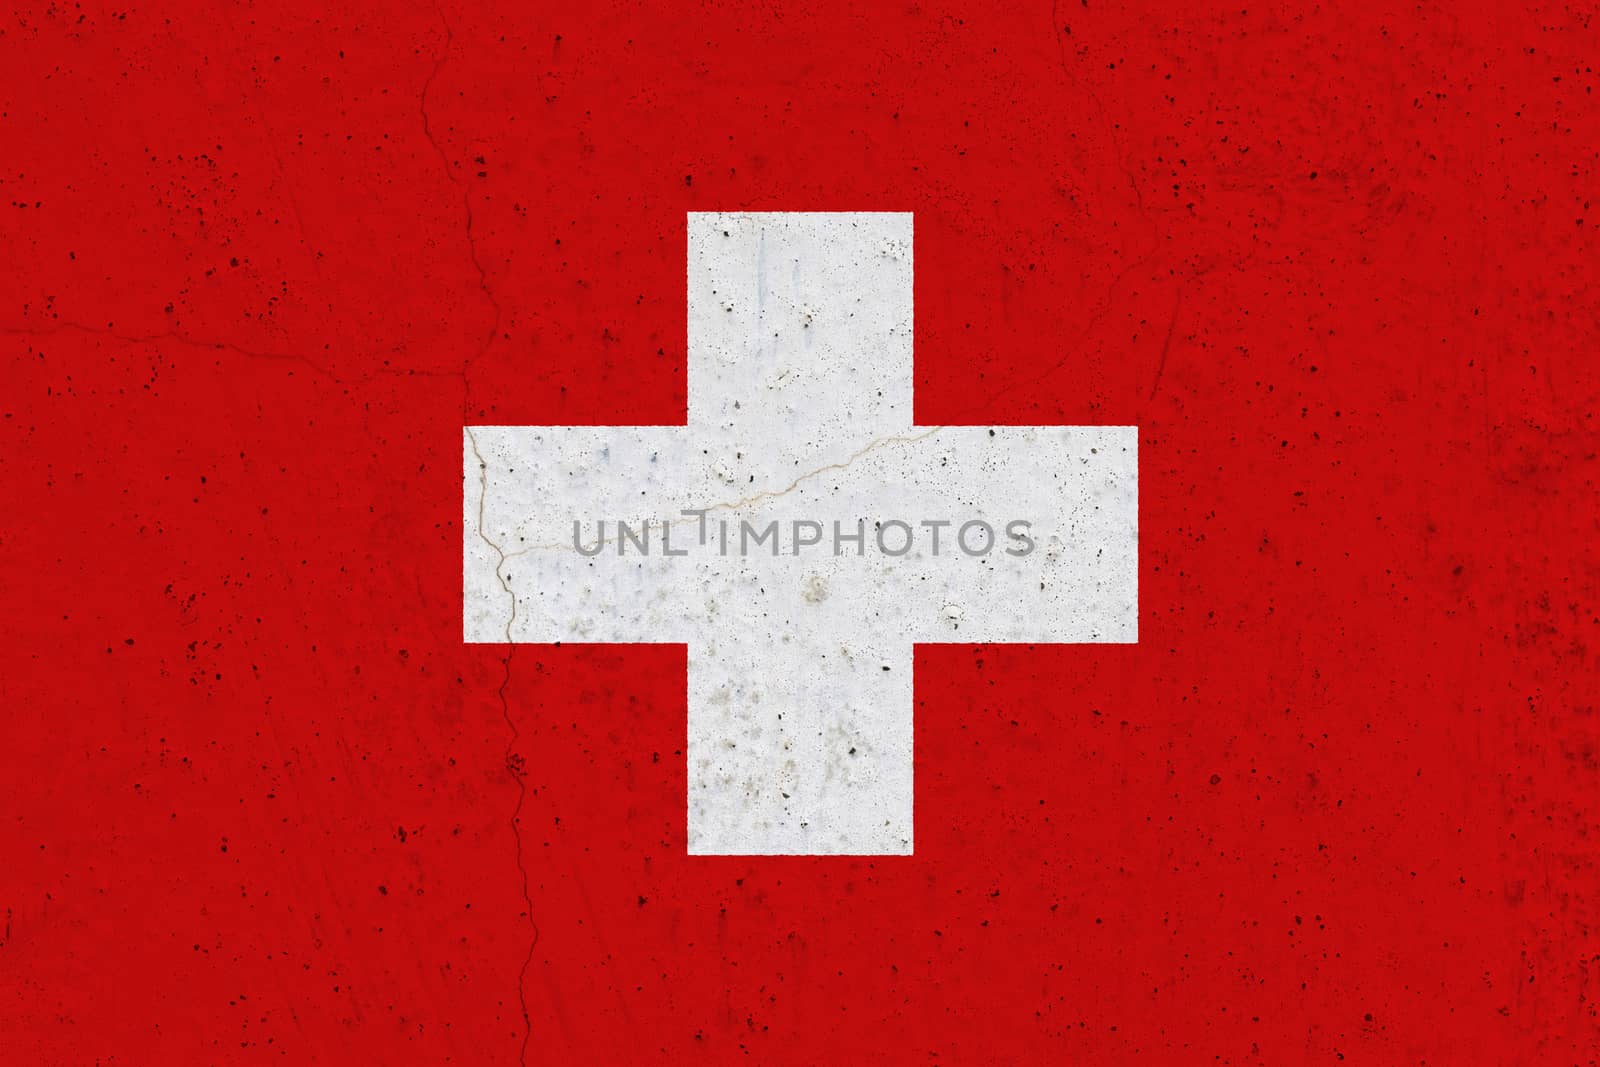 Switzerland flag on concrete wall. Patriotic grunge background. National flag of Switzerland